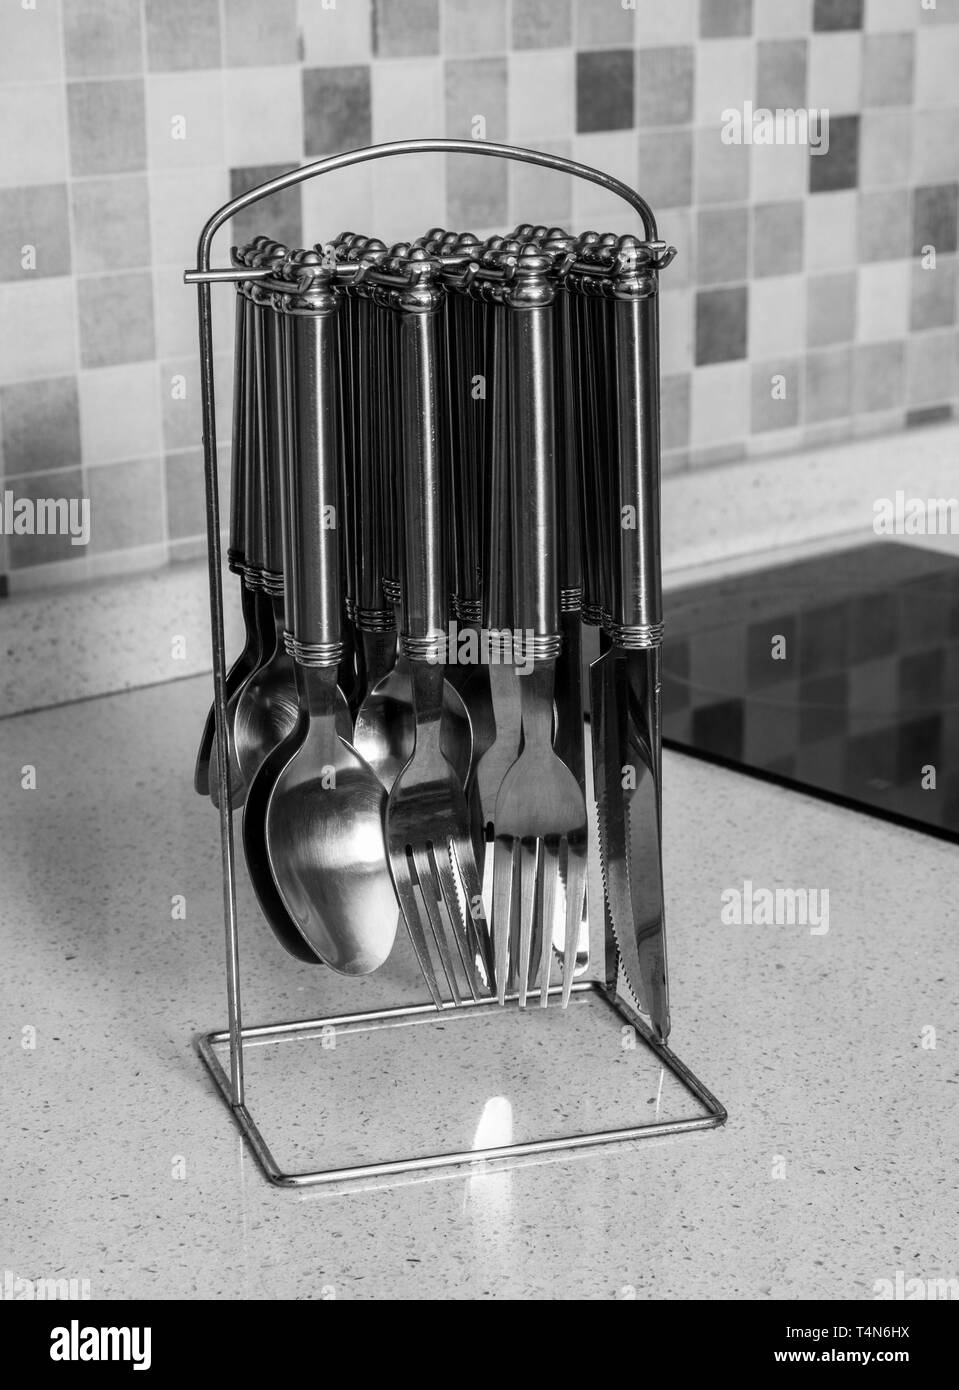 Cutlery closeup in modern kitchen Stock Photo